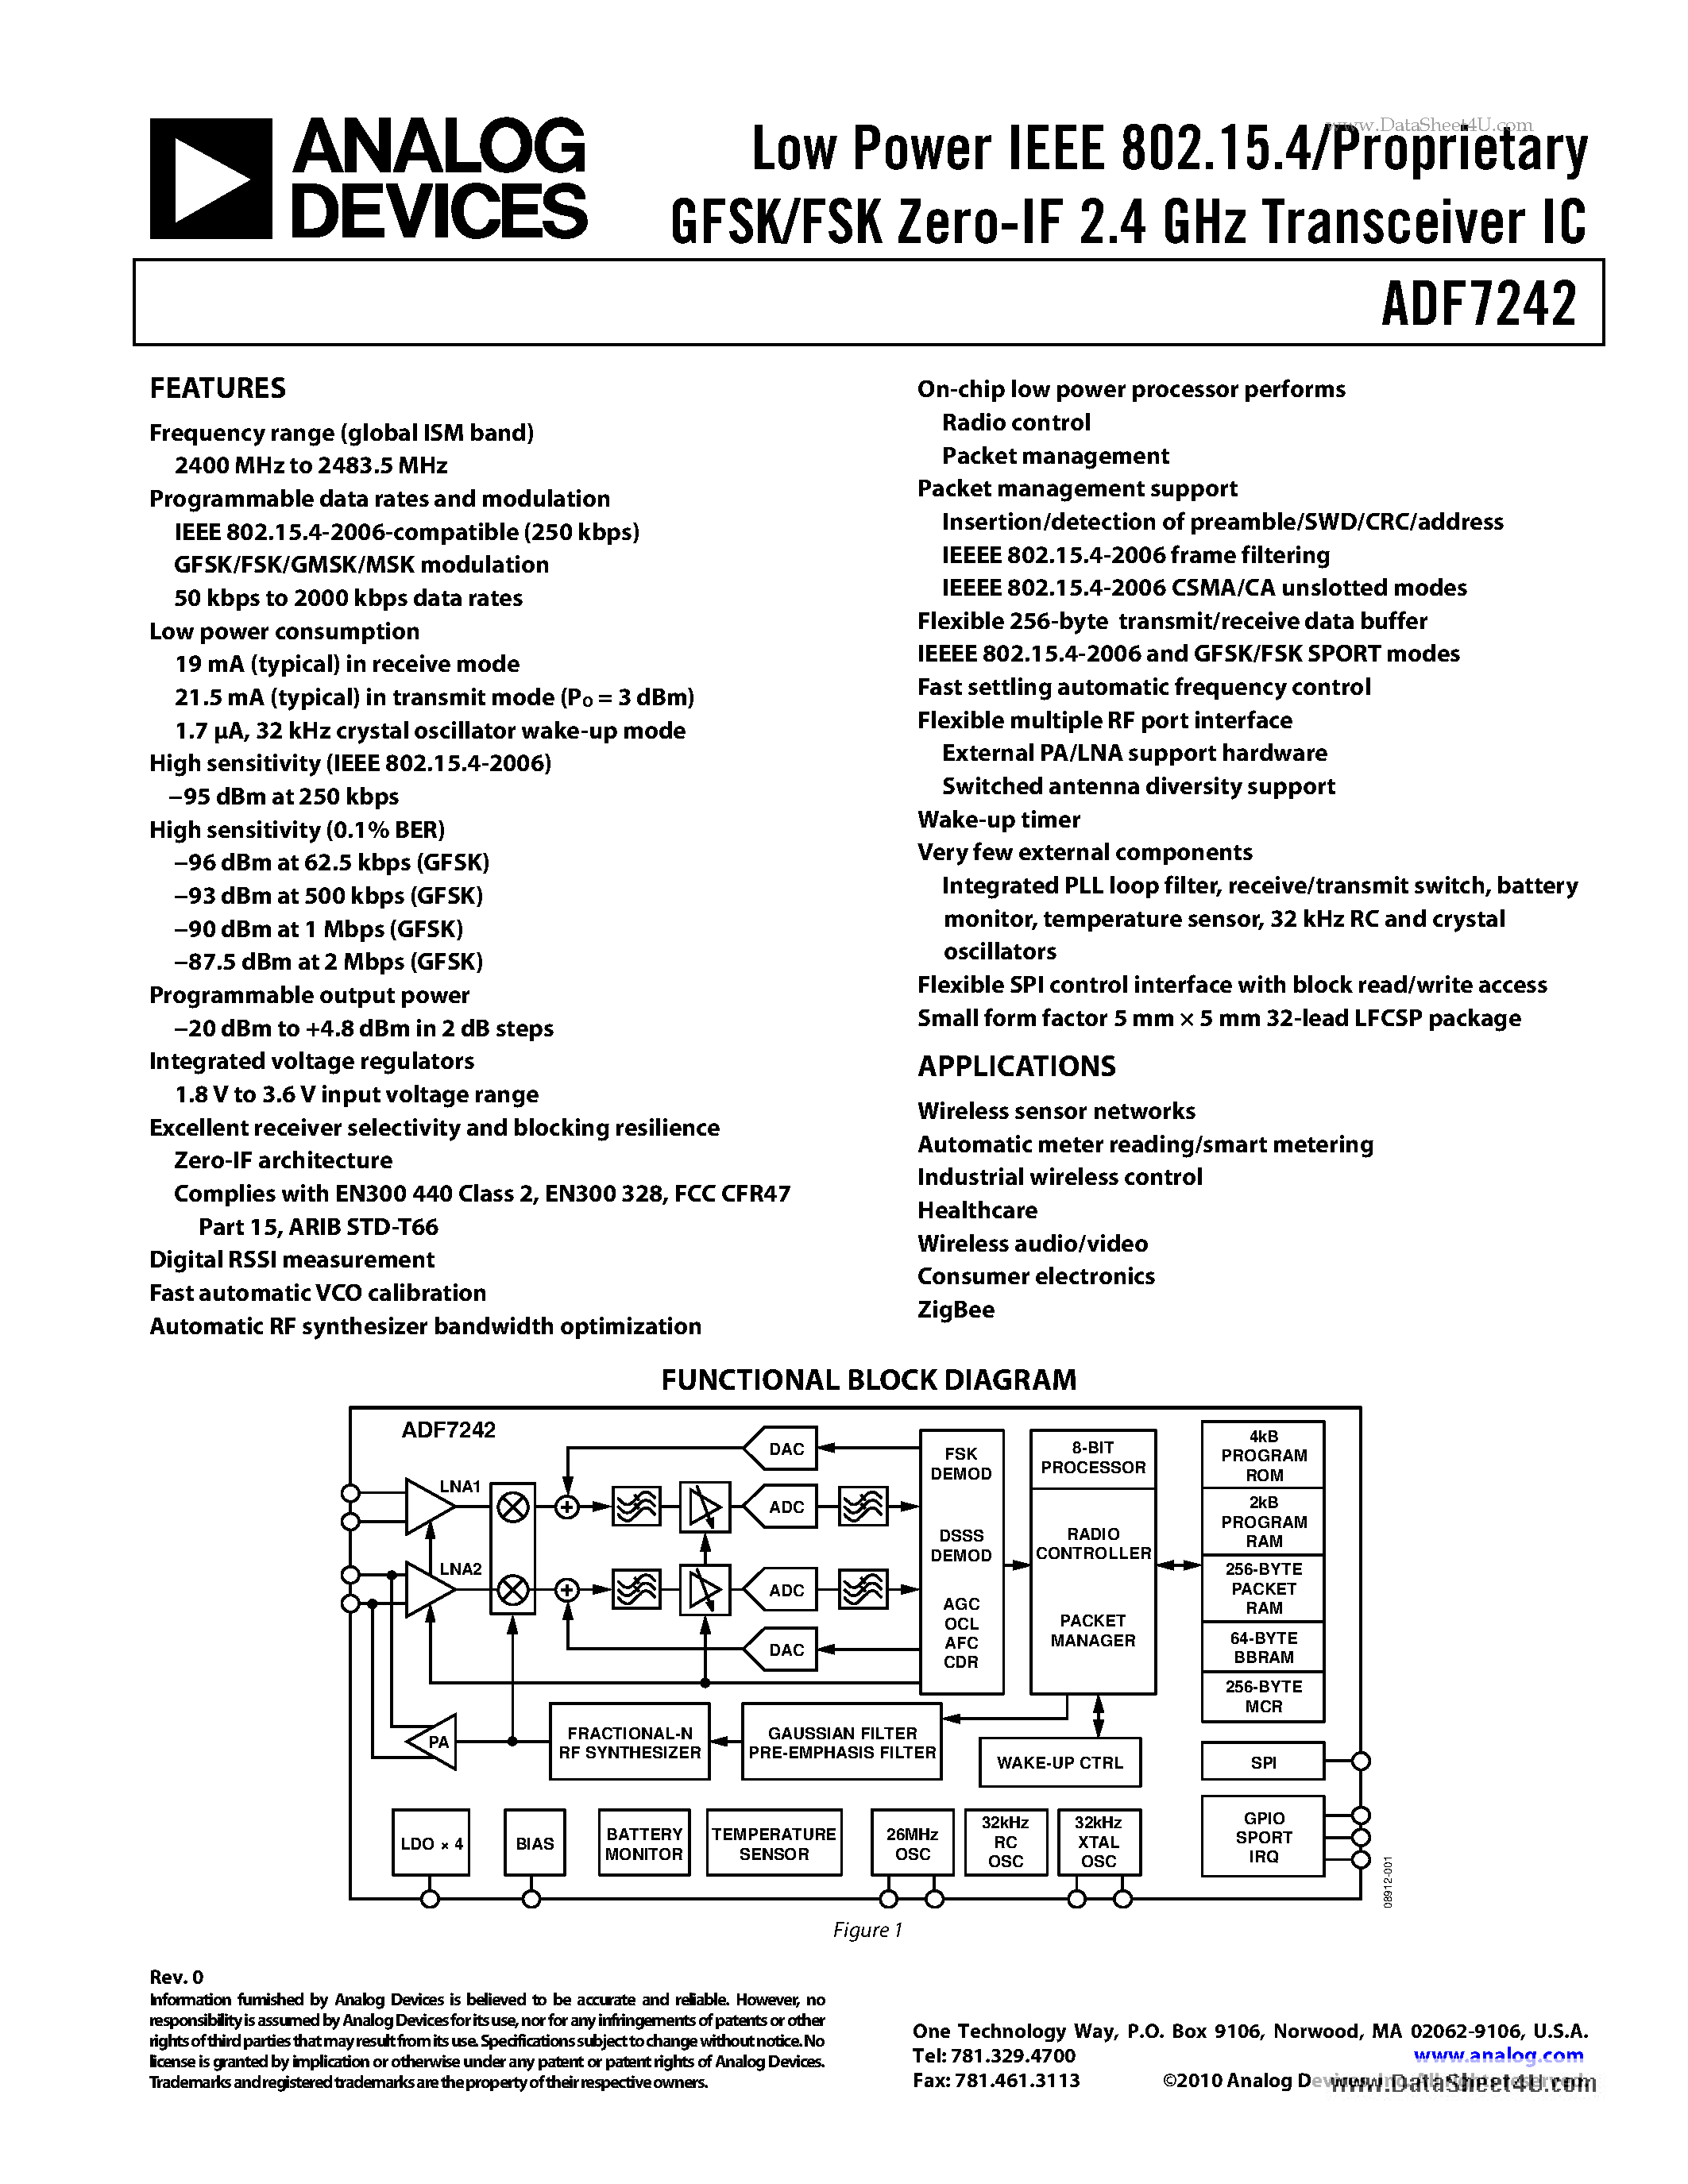 Datasheet ADF7242 - Low Power IEEE 802.15.4/Proprietary GFSK/FSK Zero-IF 2.4 GHz Transceiver IC page 1